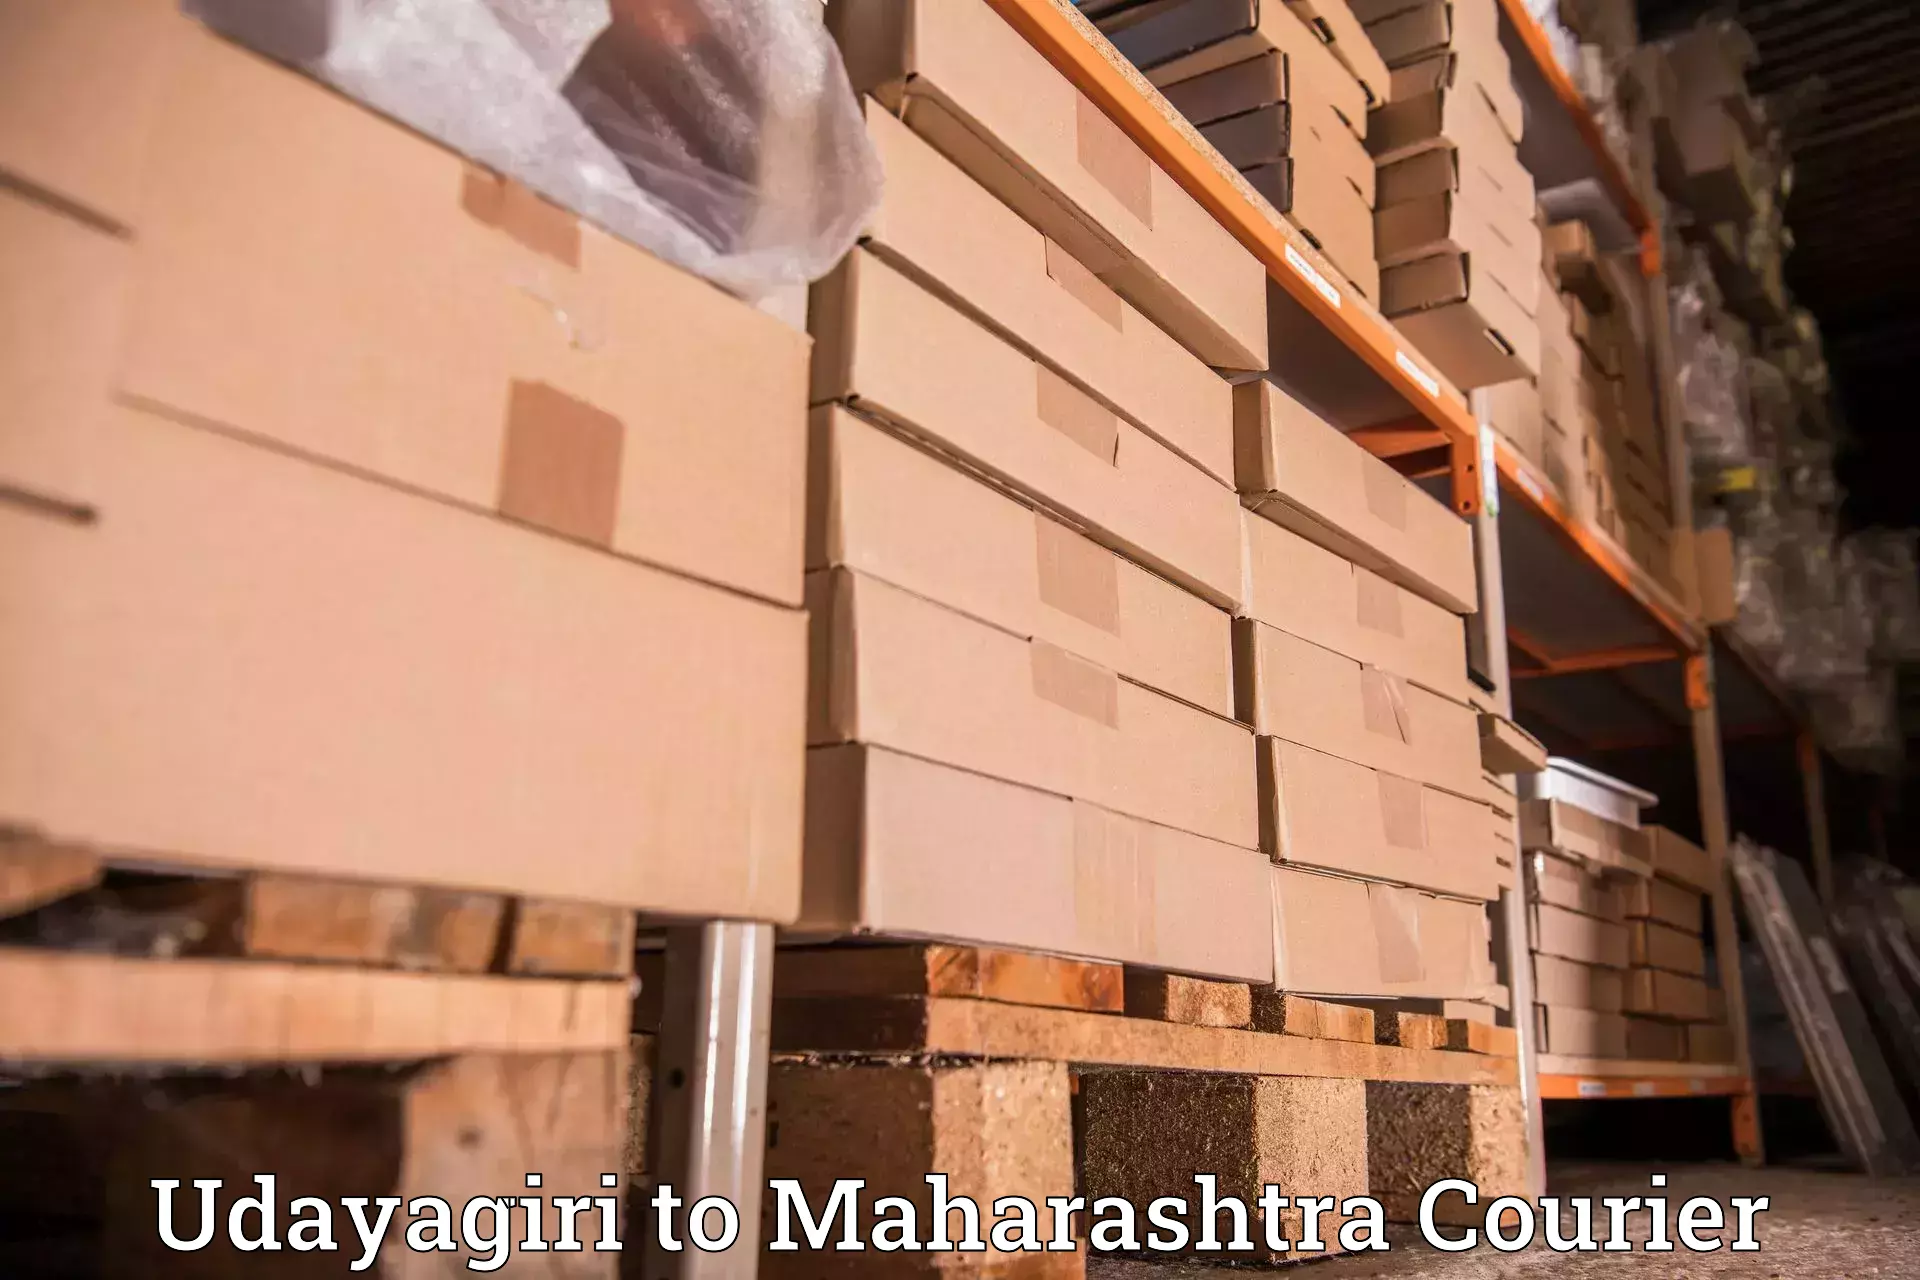 Local delivery service Udayagiri to Solapur